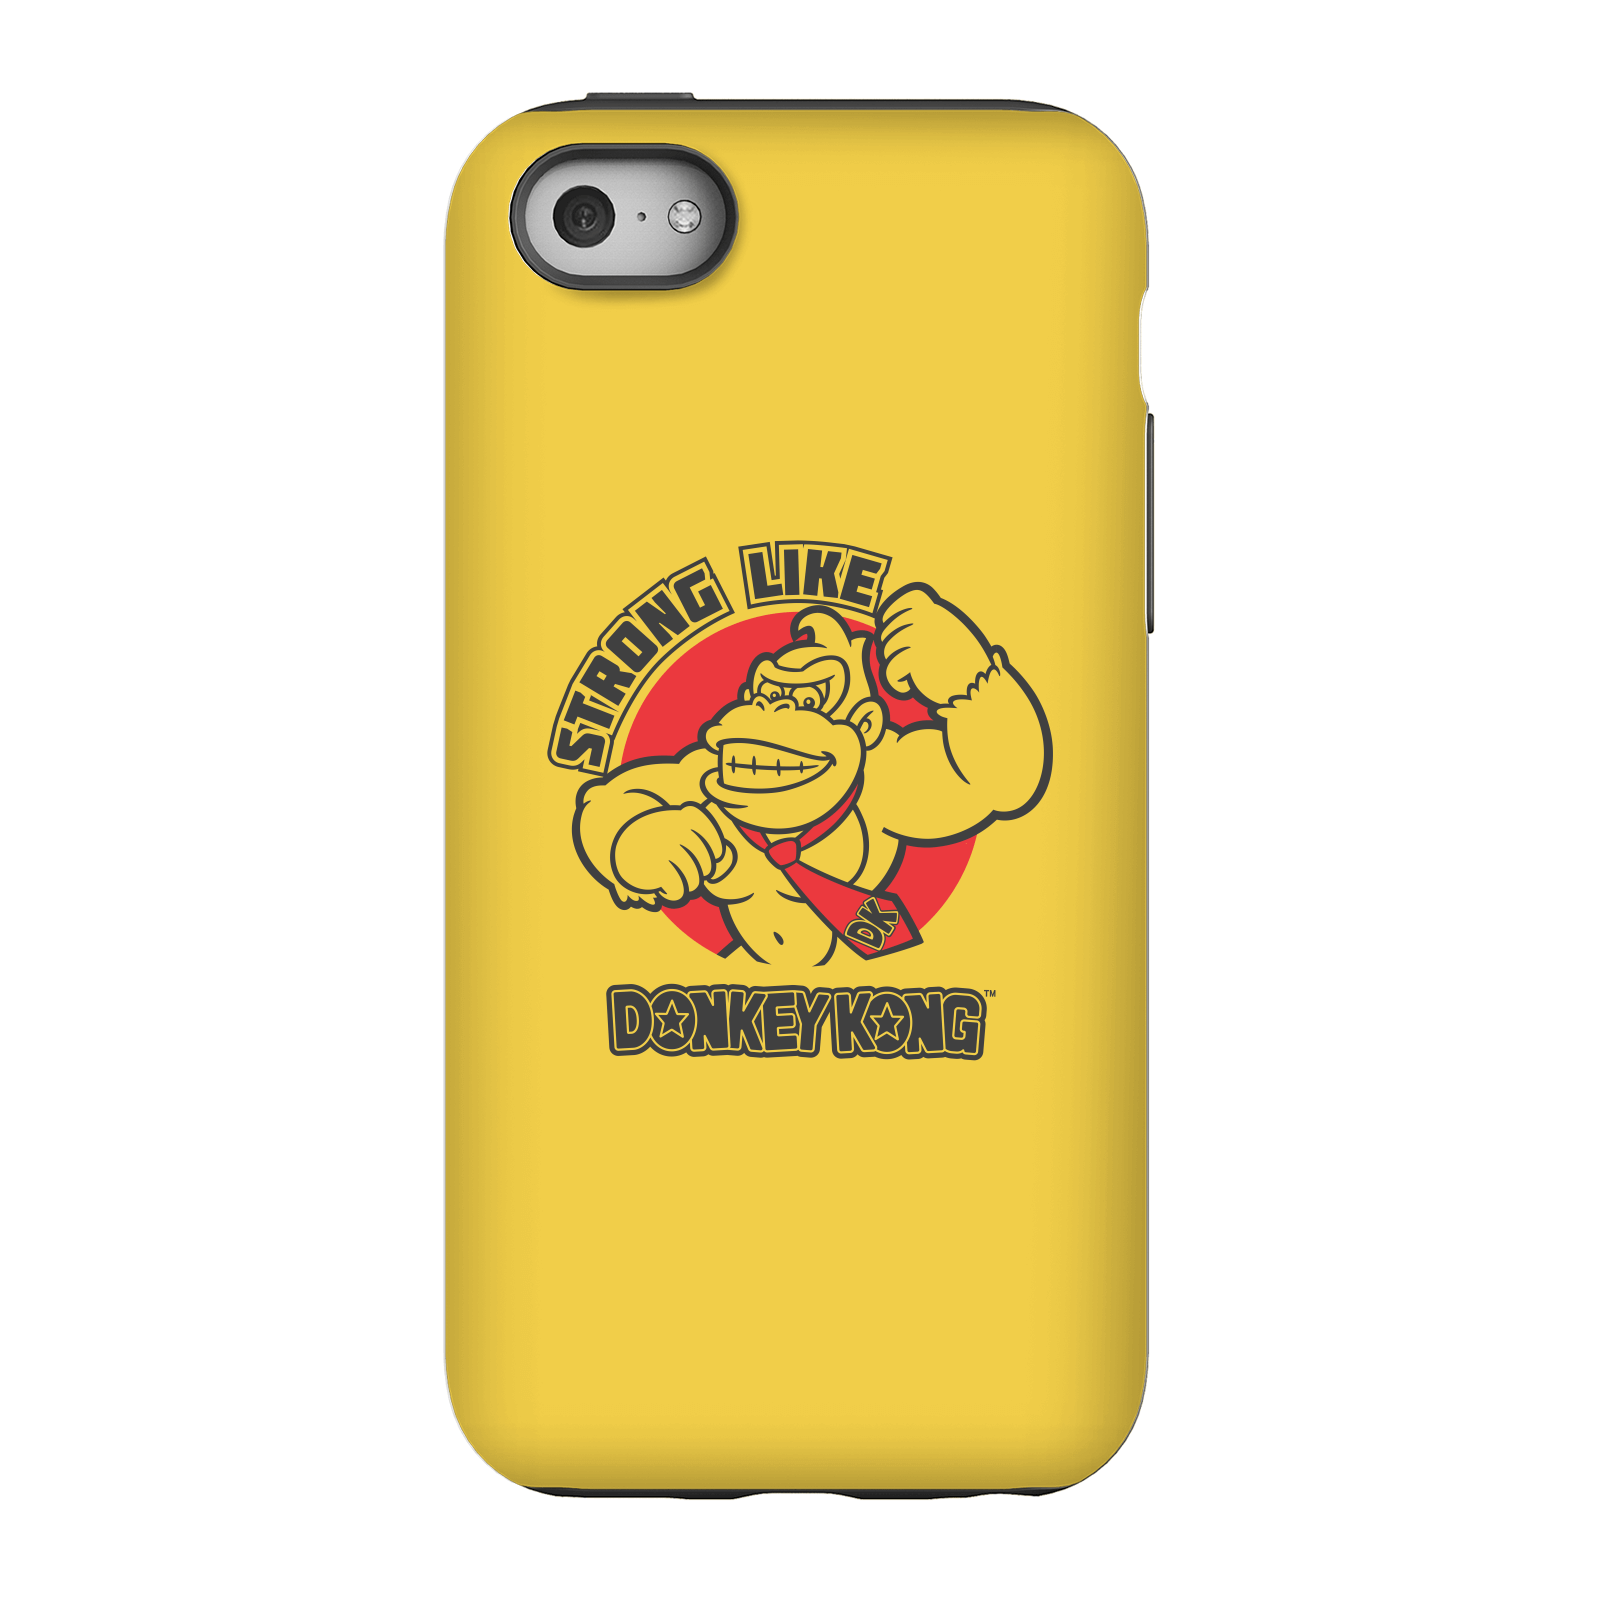 Nintendo Donkey Kong Strong Like Donkey Kong Phone Case - iPhone 5C - Tough Case - Matte